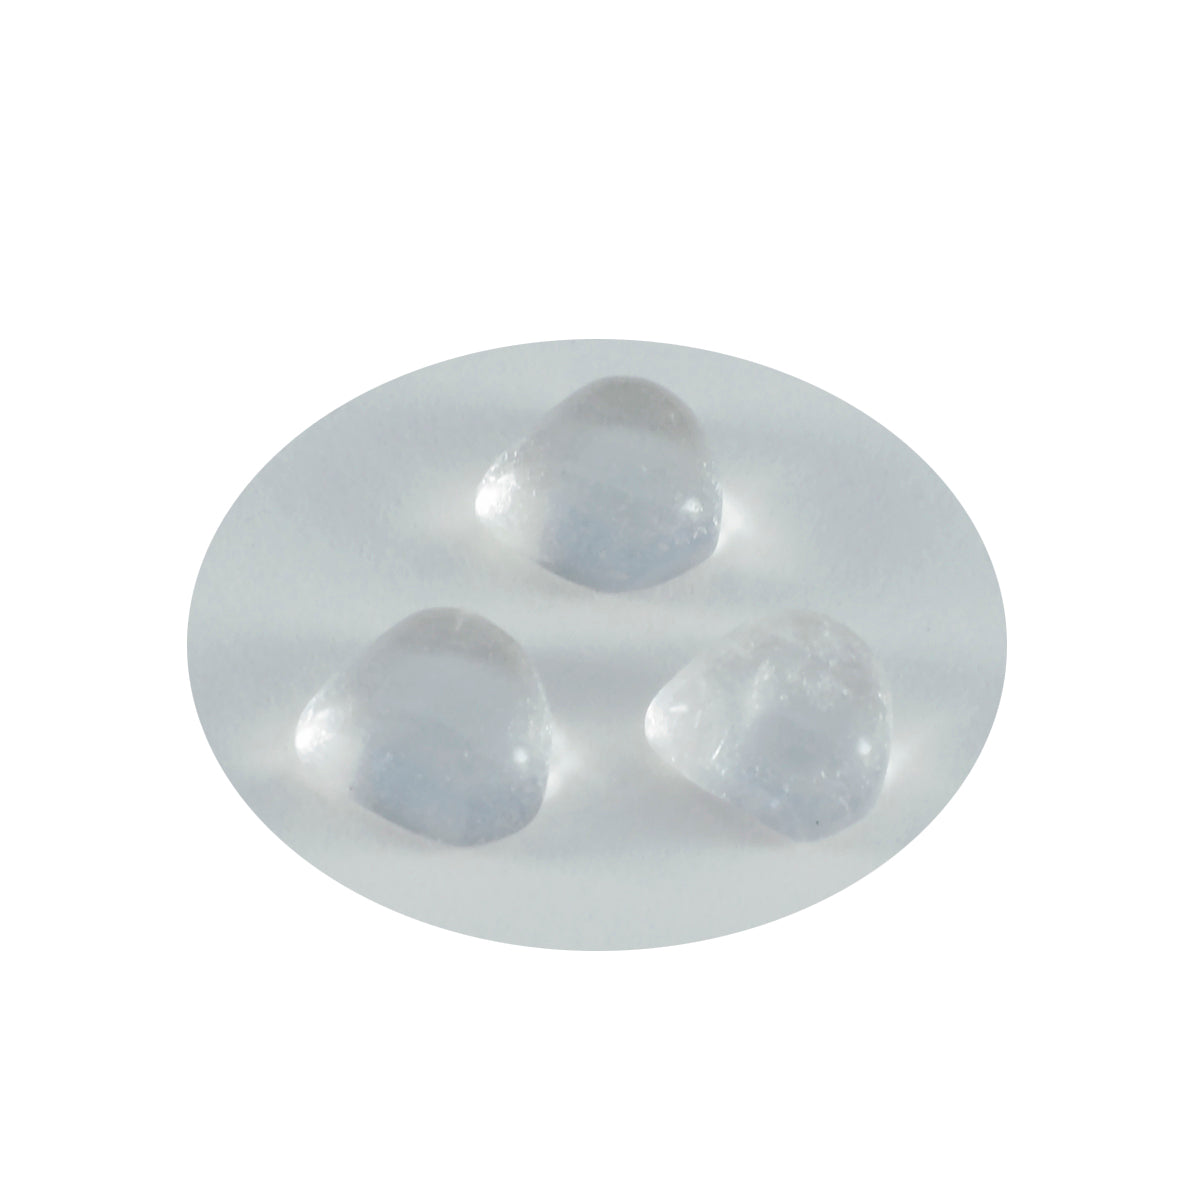 Riyogems 1PC White Crystal Quartz Cabochon 14x14 mm Heart Shape A+1 Quality Gemstone